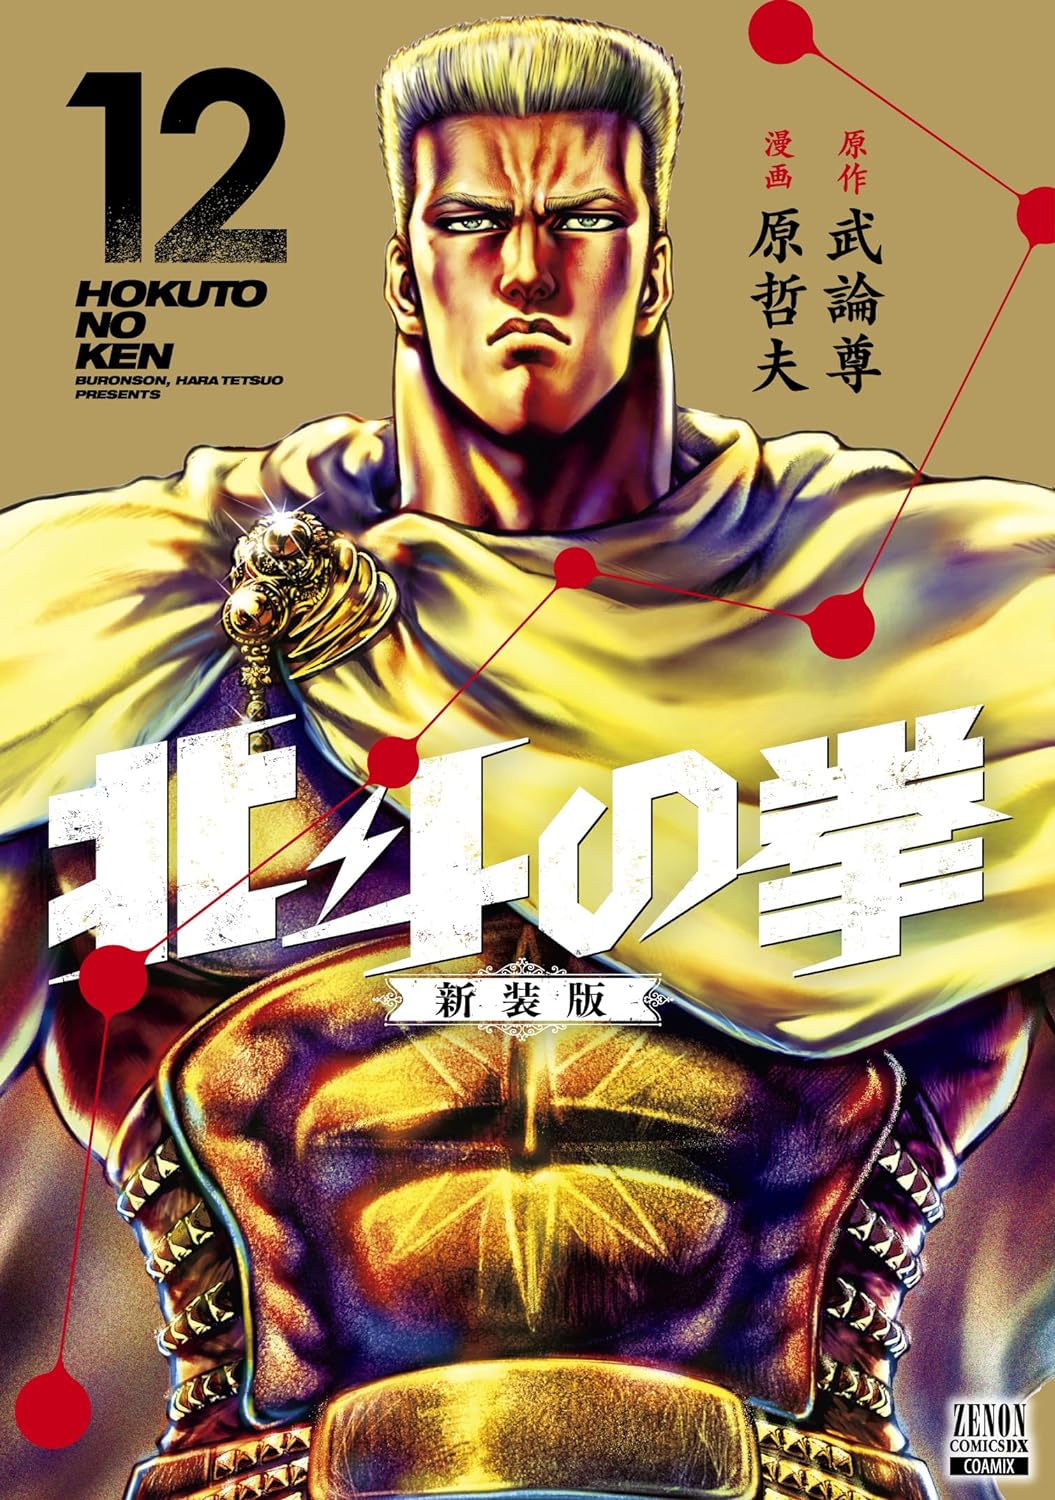 Hokuto no Ken (Fist of the North Star) #12  / Comic